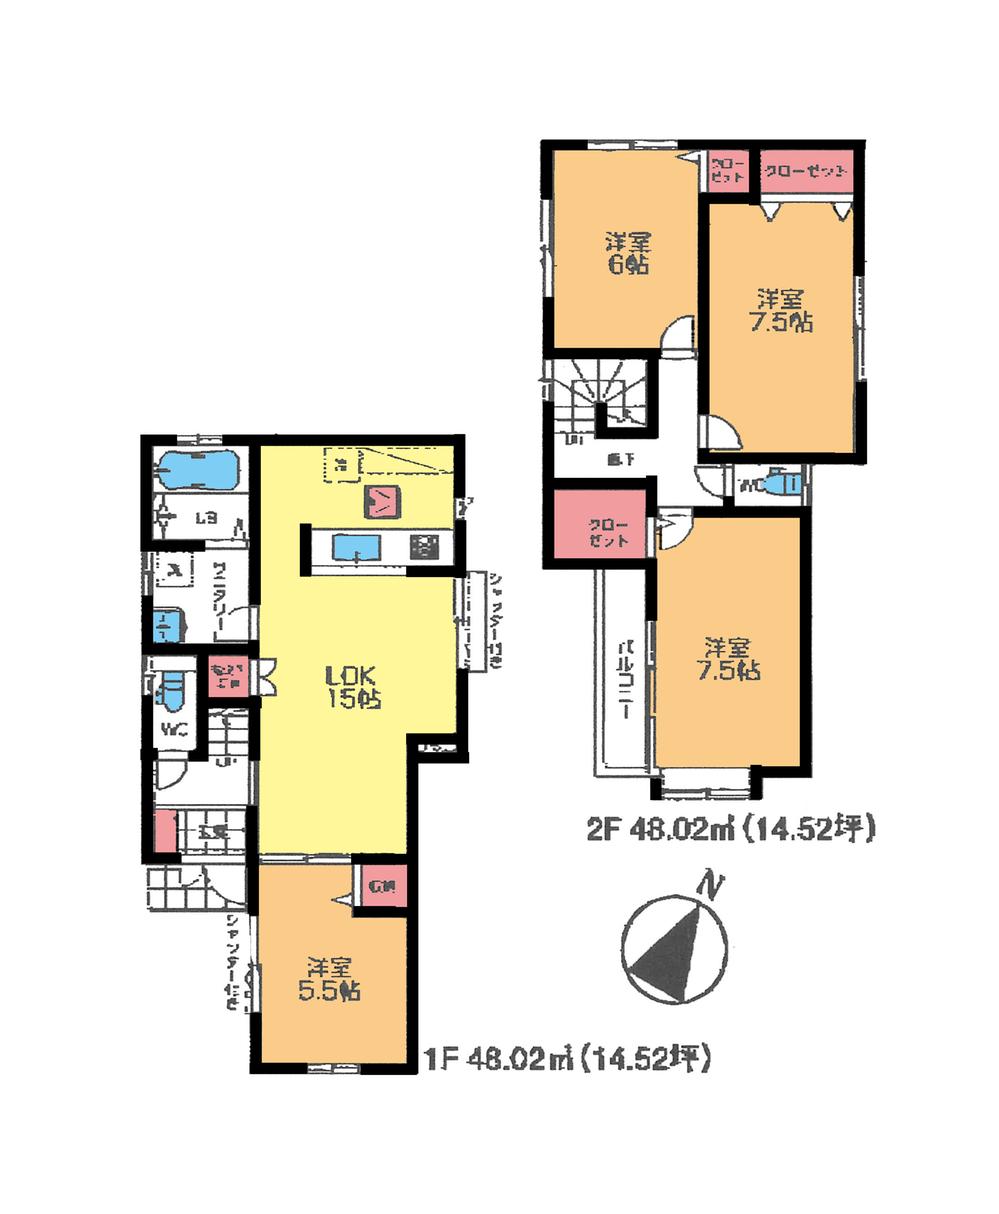 Floor plan. (3 Building), Price 26,800,000 yen, 4LDK, Land area 100 sq m , Building area 96.04 sq m